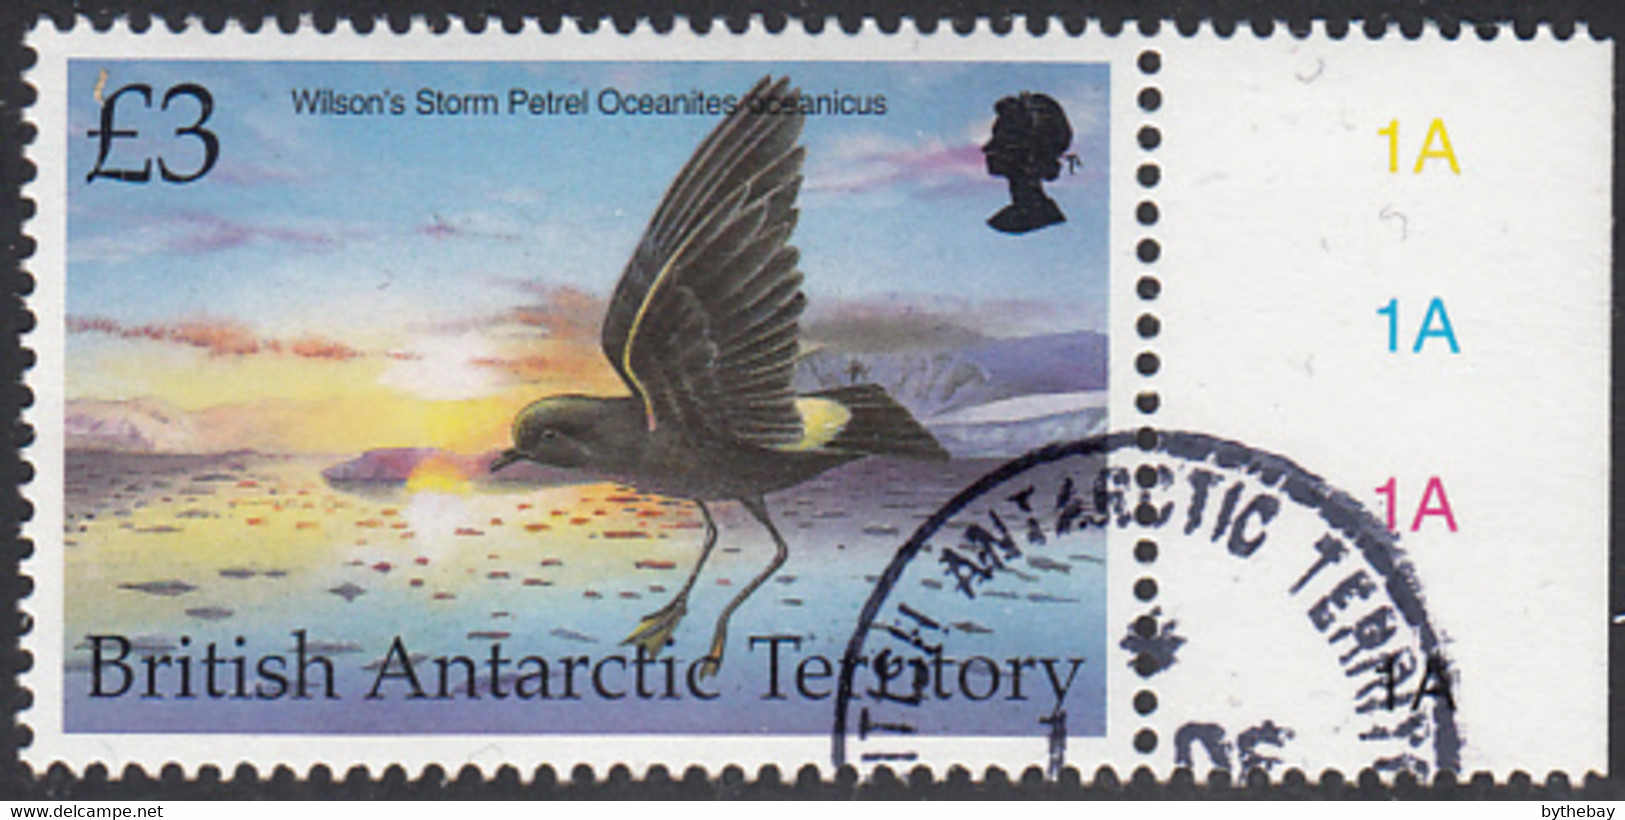 British Antarctic Territory 1998 Used Sc #273 3pd Wilson's Storm Petrel Birds - Gebraucht